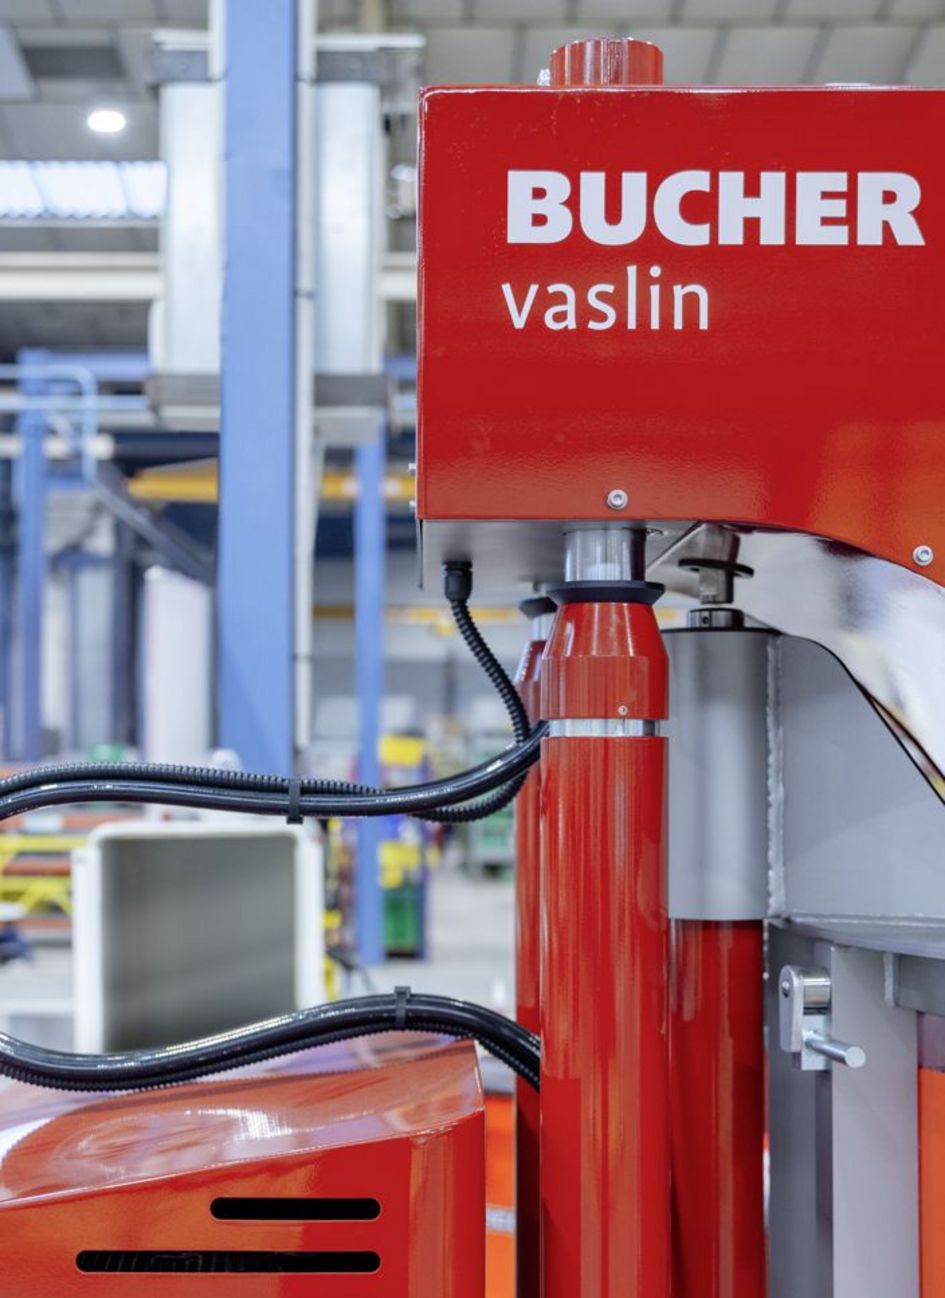 Bucher Vaslin machine grape press